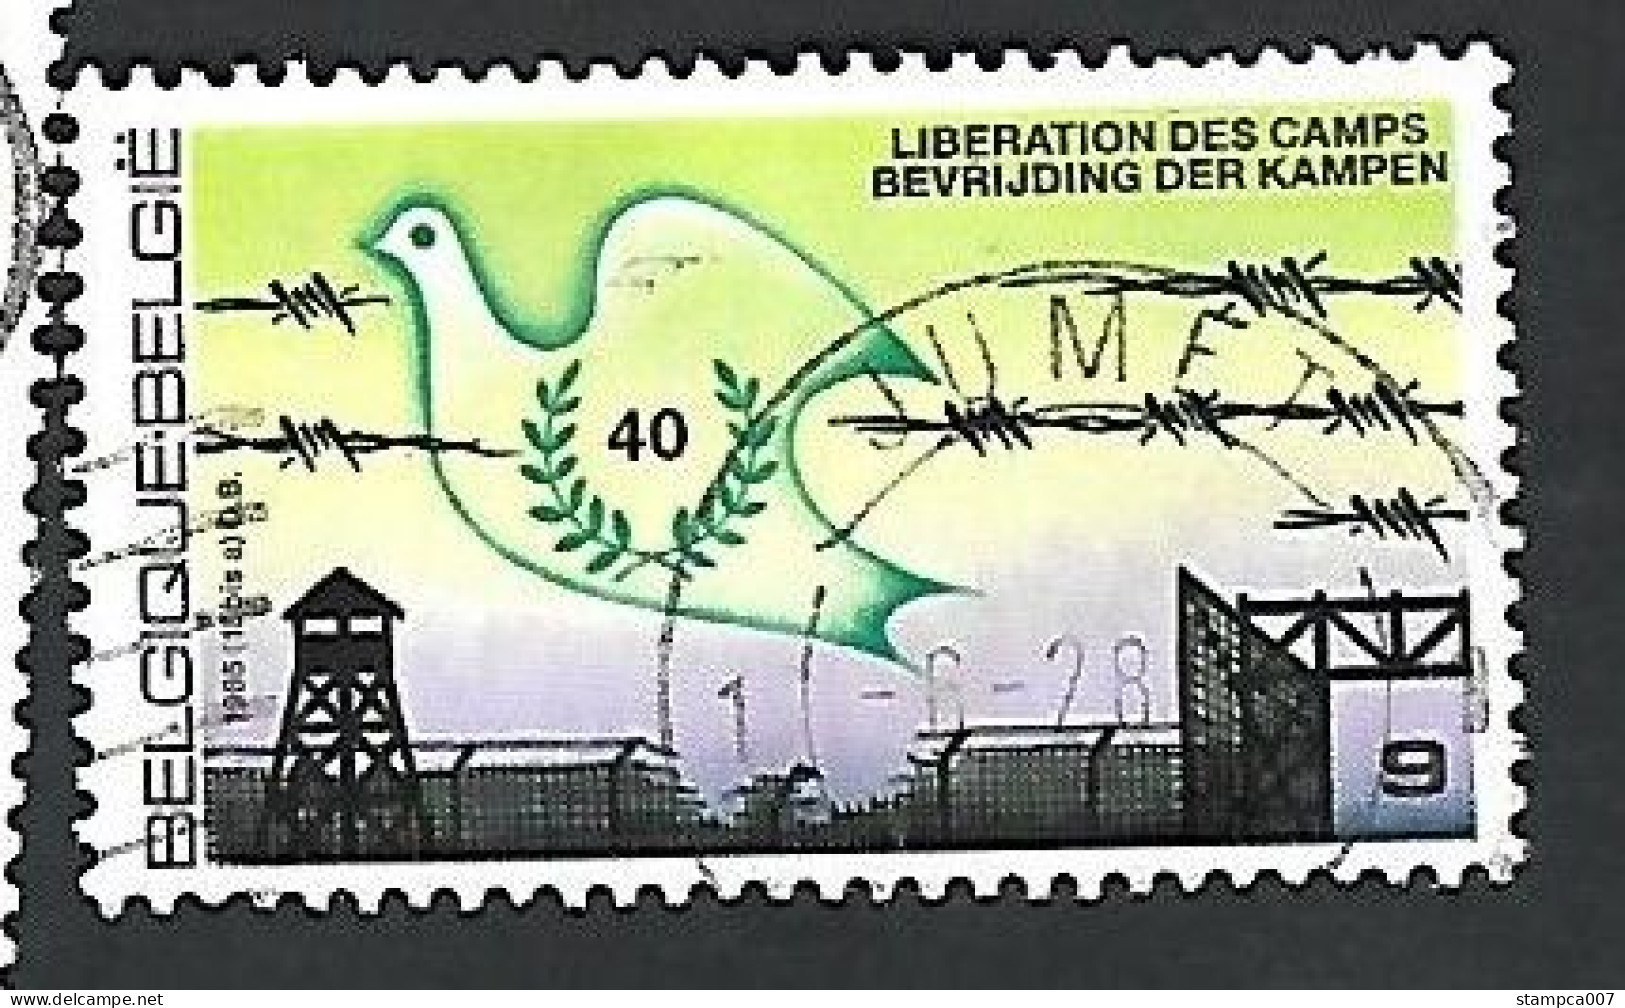 OCB Nr 2186 Liberation Bevrijding Guerre War Oorlog  - Centrale Stempel Jumet - Used Stamps